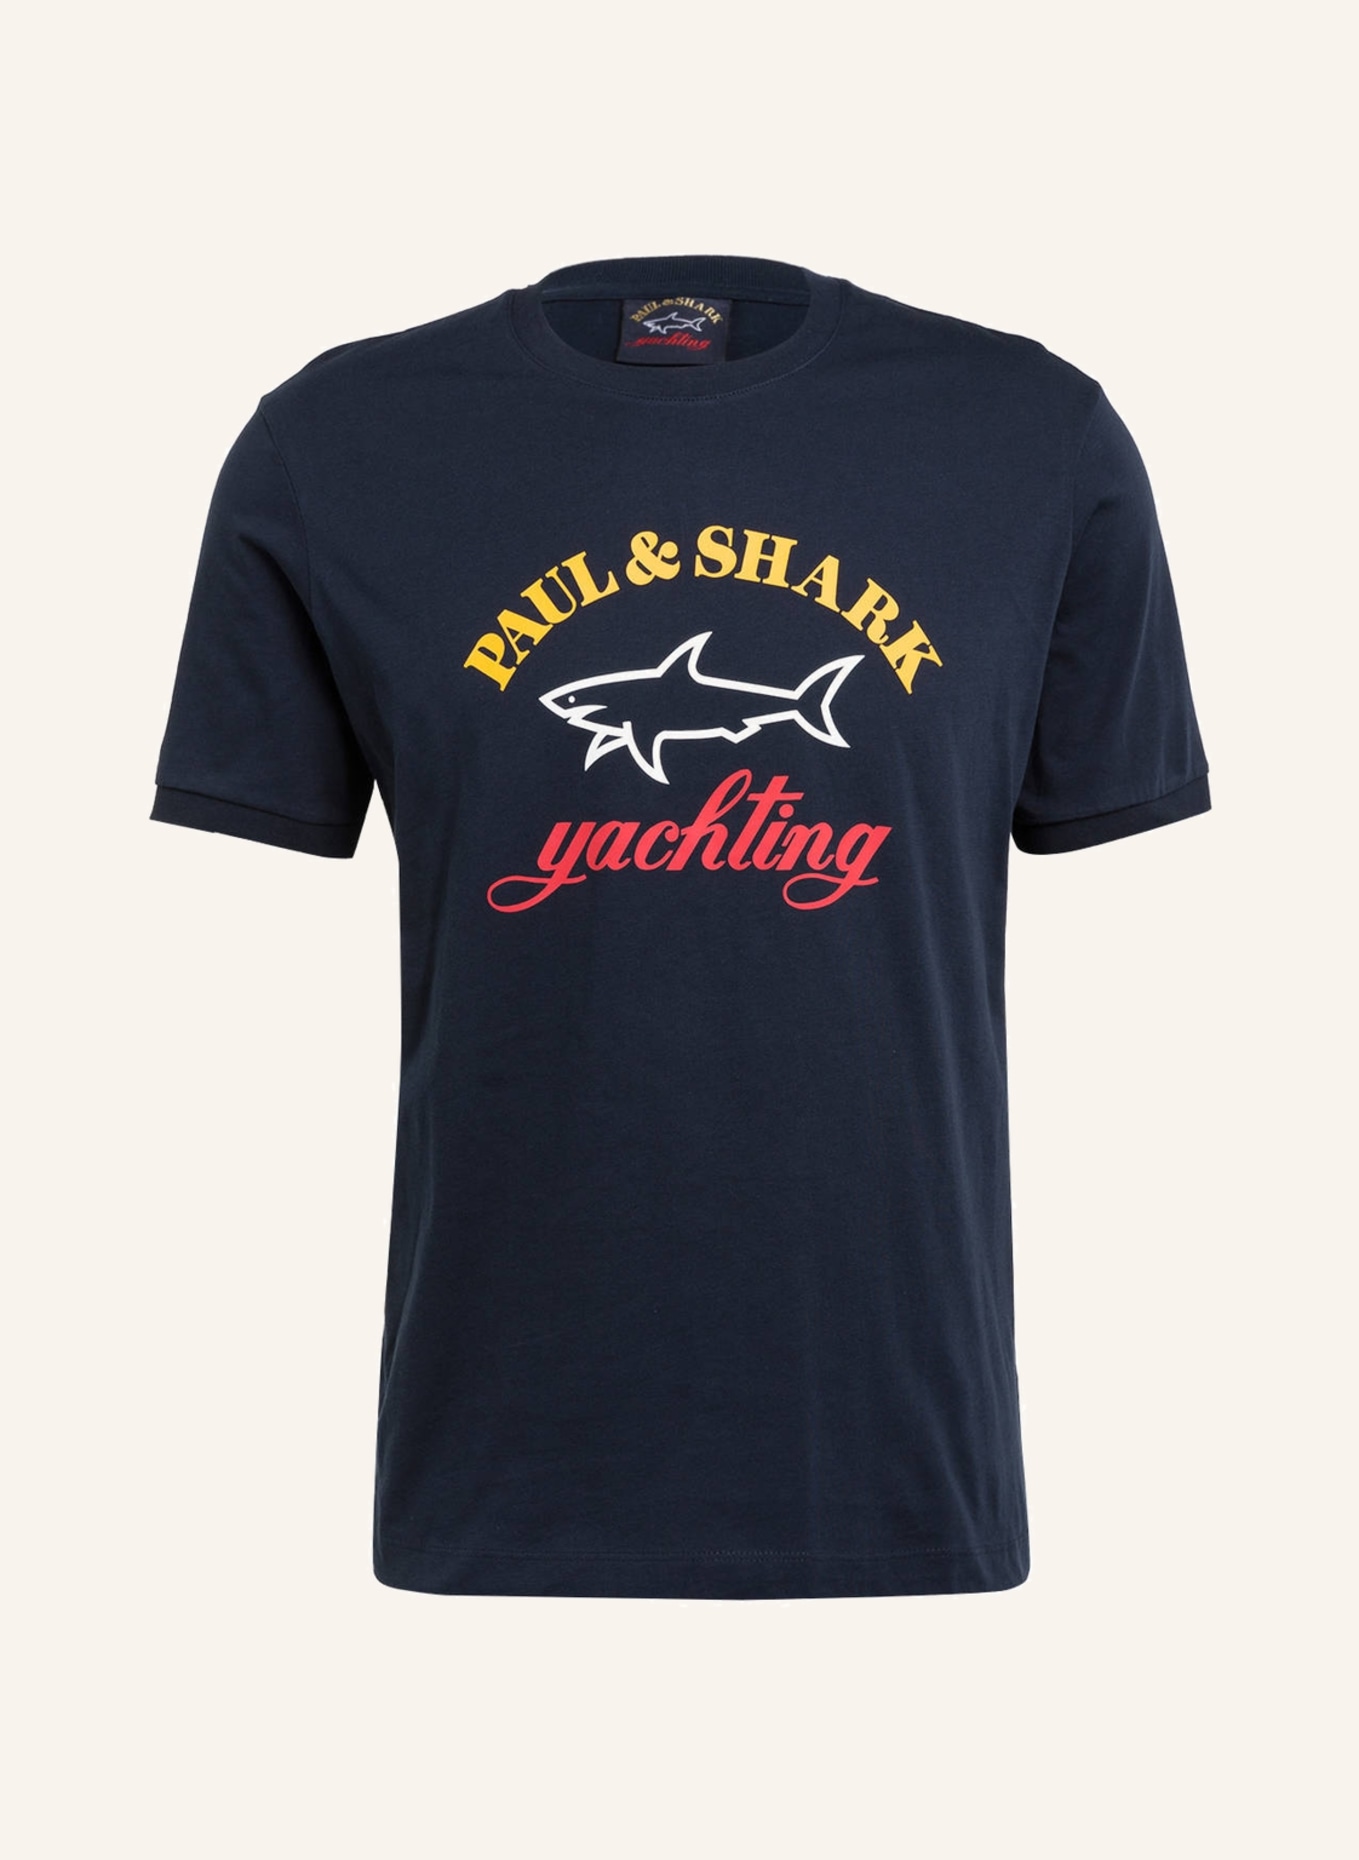 PAUL & SHARK T-Shirt, Farbe: DUNKELBLAU (Bild 1)